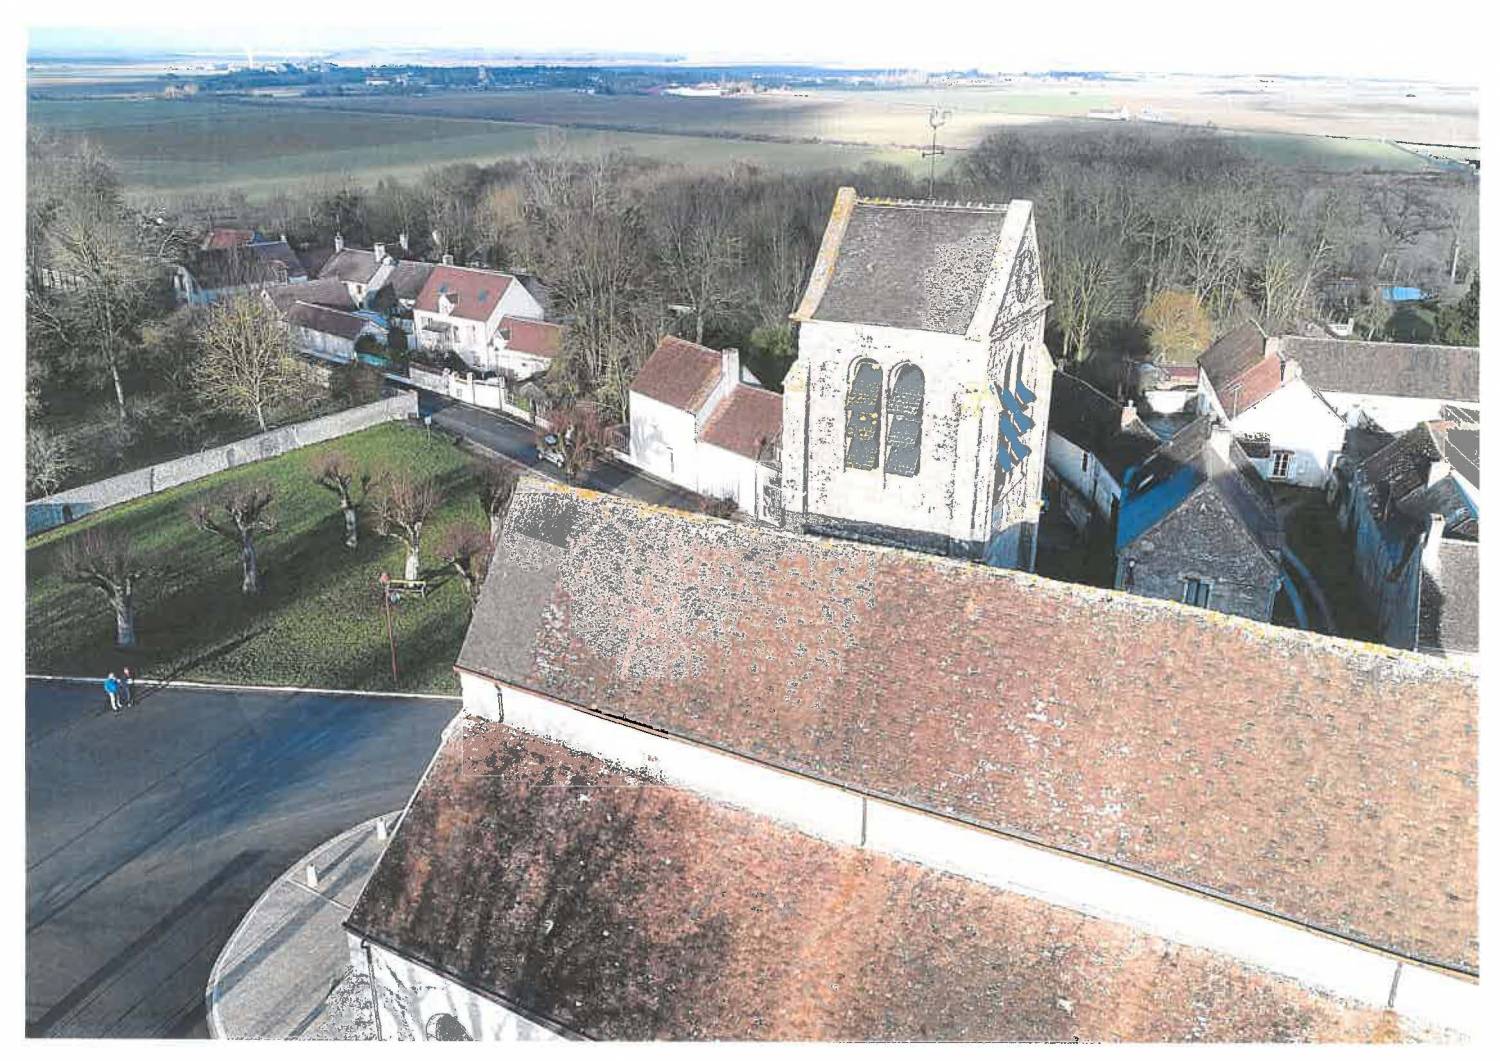 Auxy (45) - église Saint-Martin